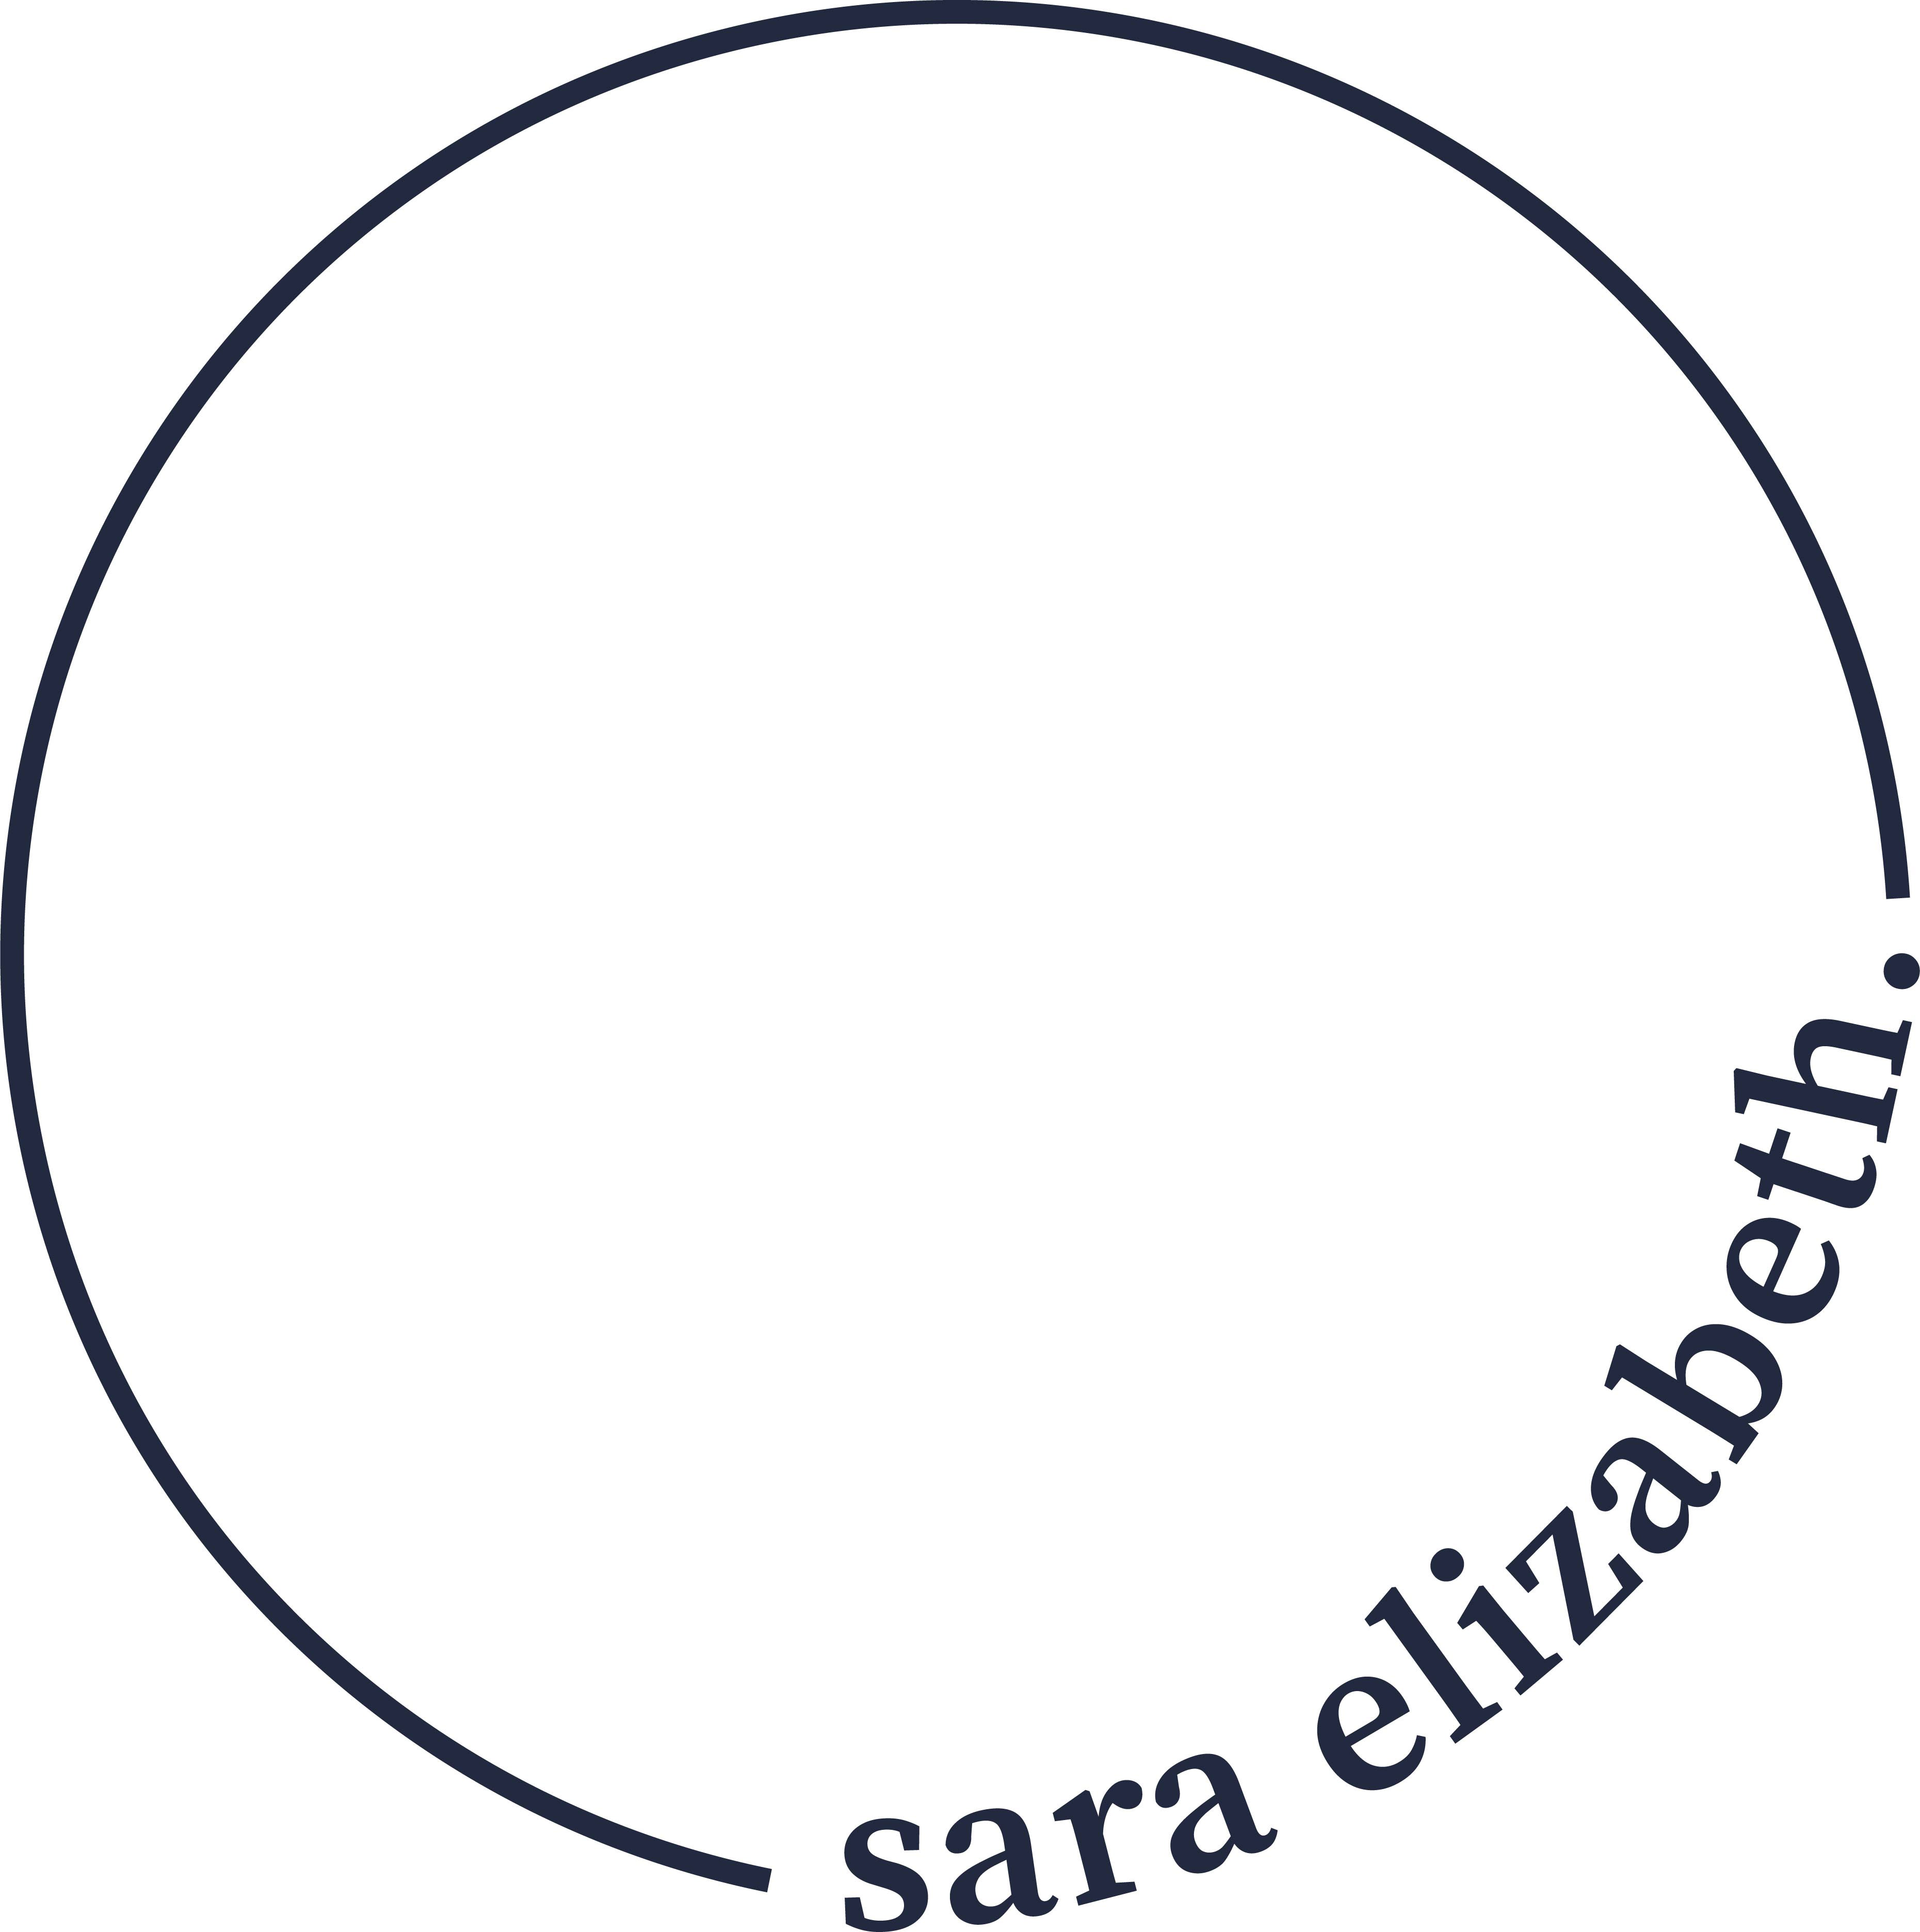 Sara Elizabeth